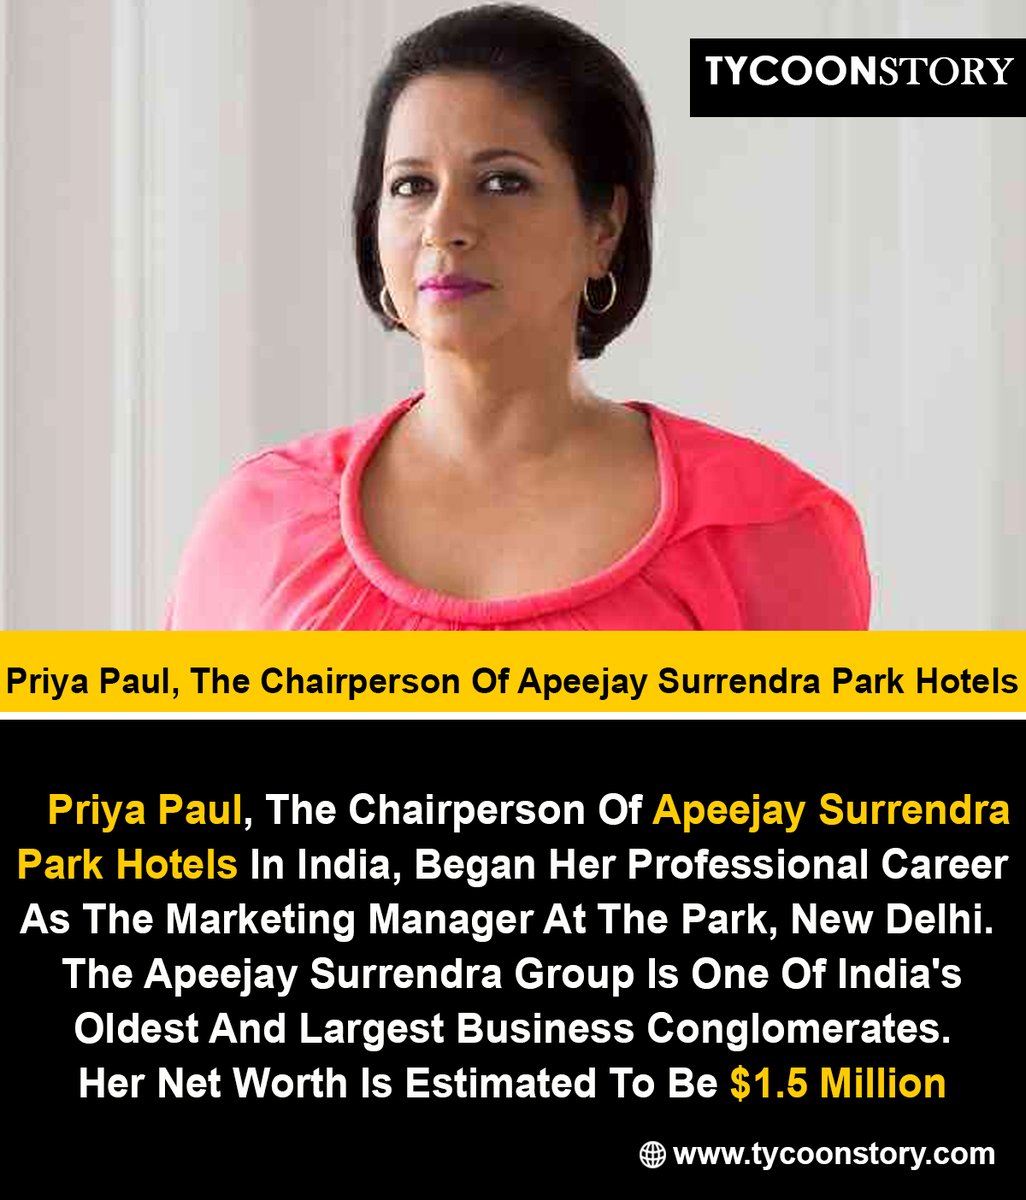 Priya Paul, The Chairperson Of Apeejay Surrendra Park Hotels
#PriyaPaul #ApeejaySurrendraParkHotels
#TheParkHotels #WomenIn #Leadership #HotelManagement #LuxuryHotels #IndianHospitality 
#BusinessLeadership #WomenEntrepreneurs
@ApeejayGroup  

tycoonstory.com